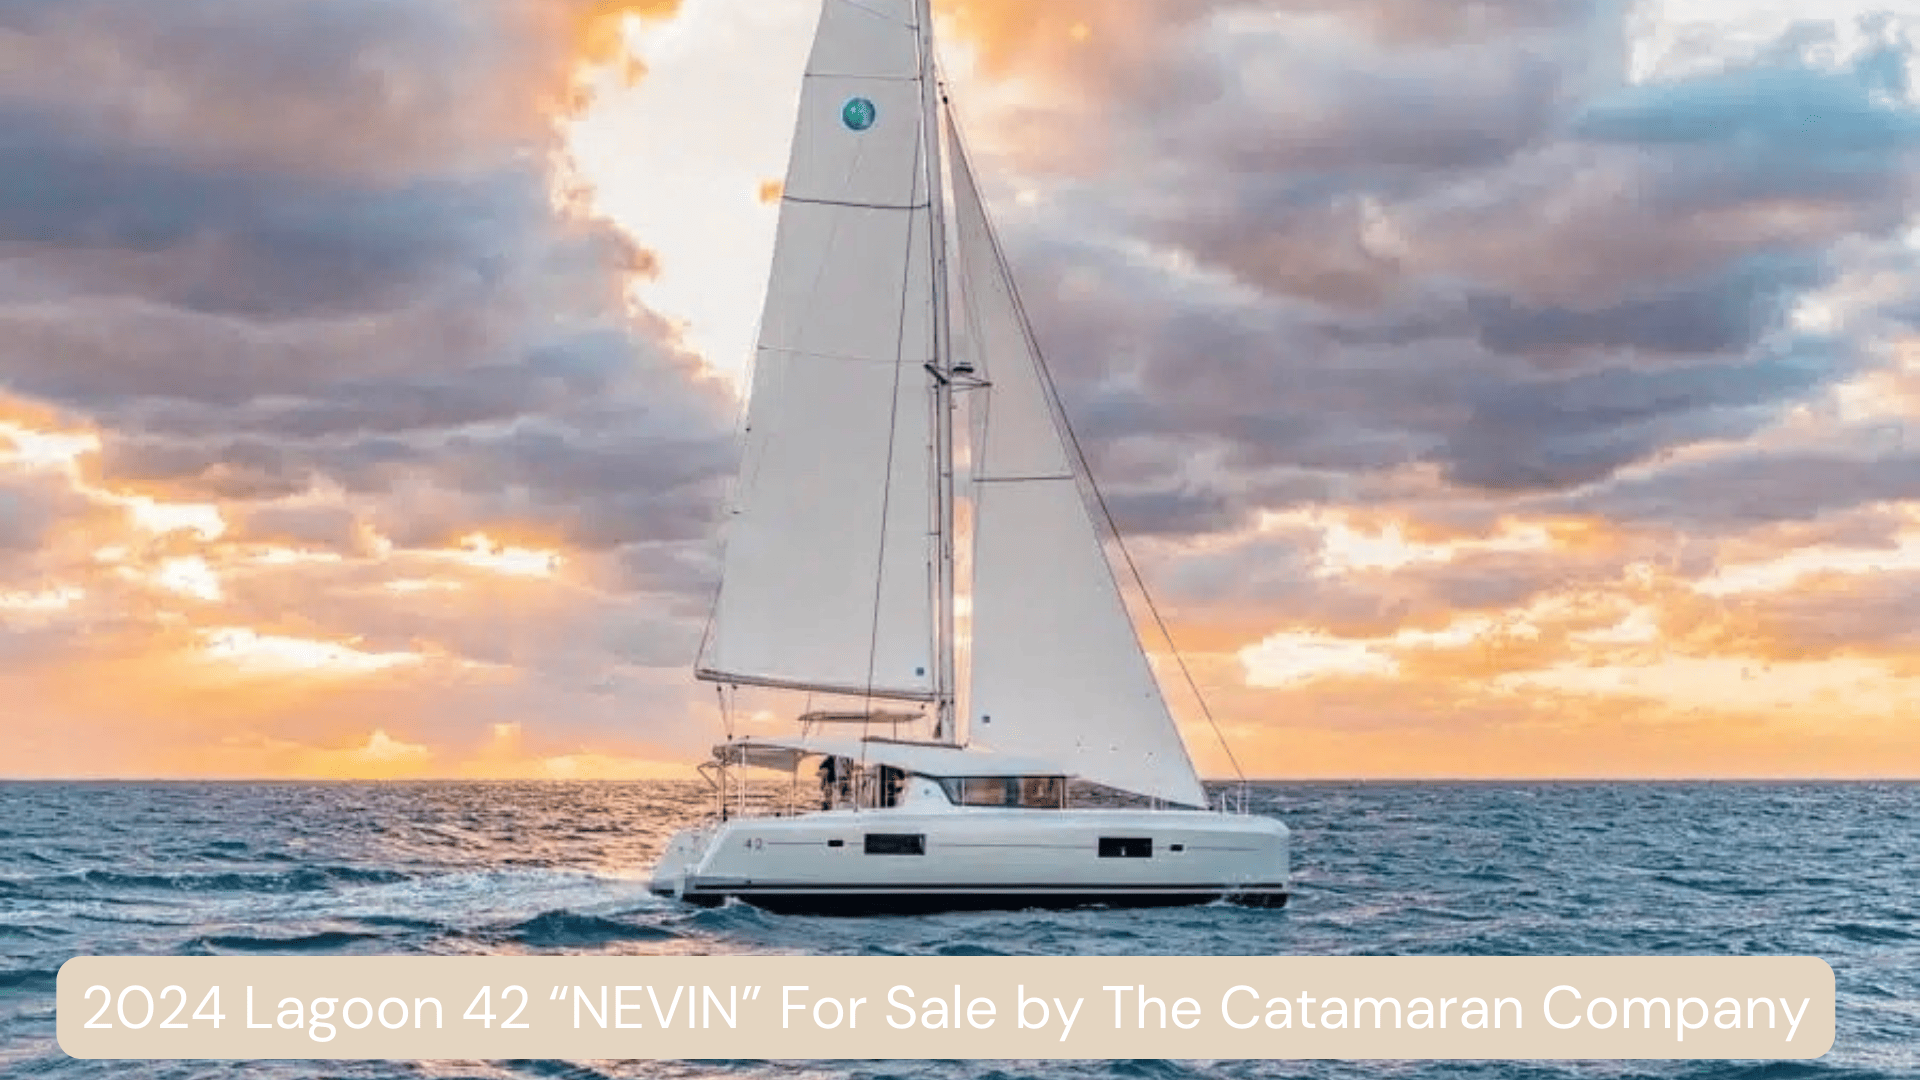 New Sail Catamaran for sale NEVIN 2024 Lagoon 42